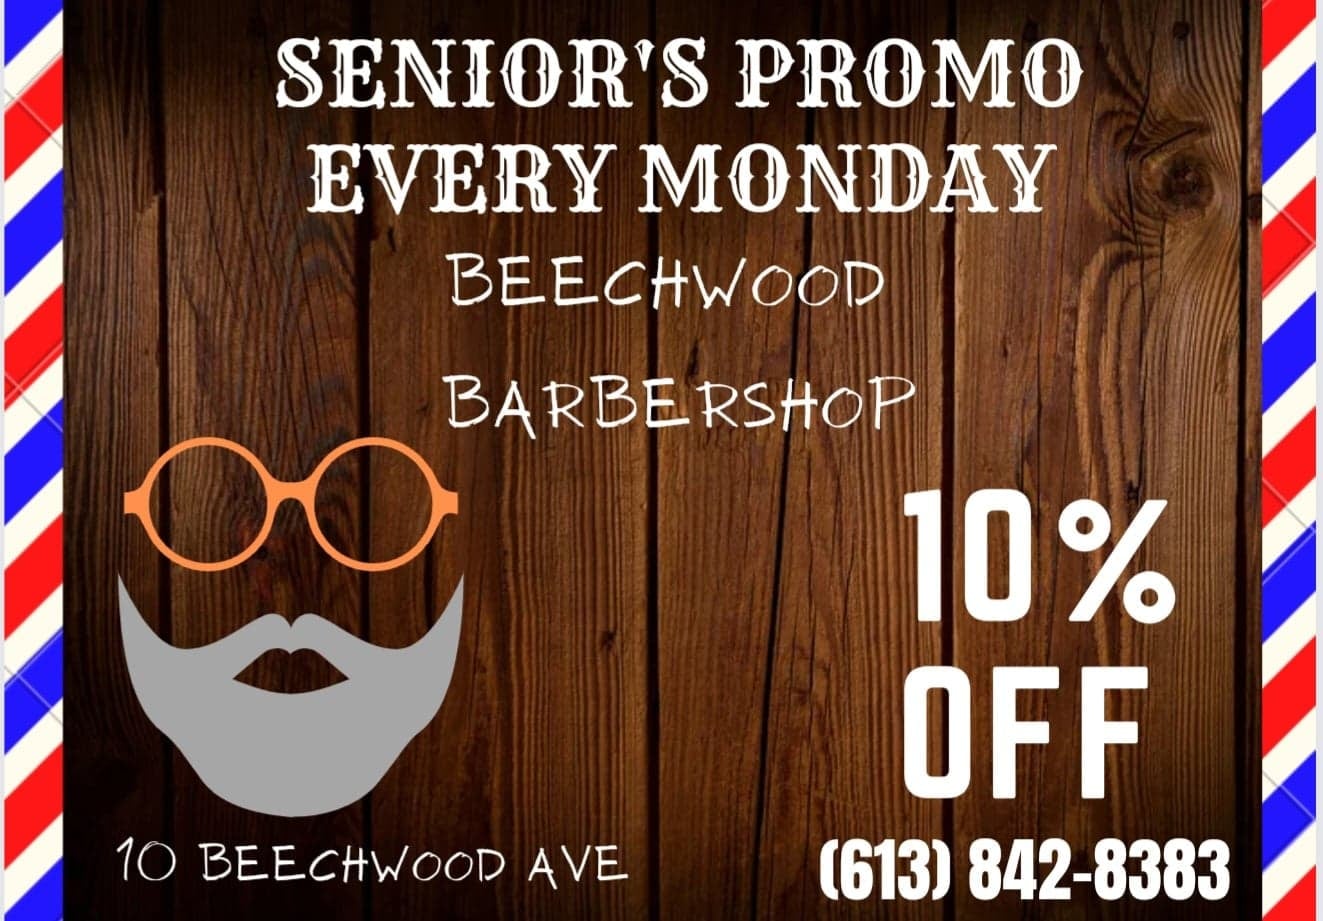 Beechwood Barbershop 10 Beechwood Ave., Vanier Ontario K1L 8L9